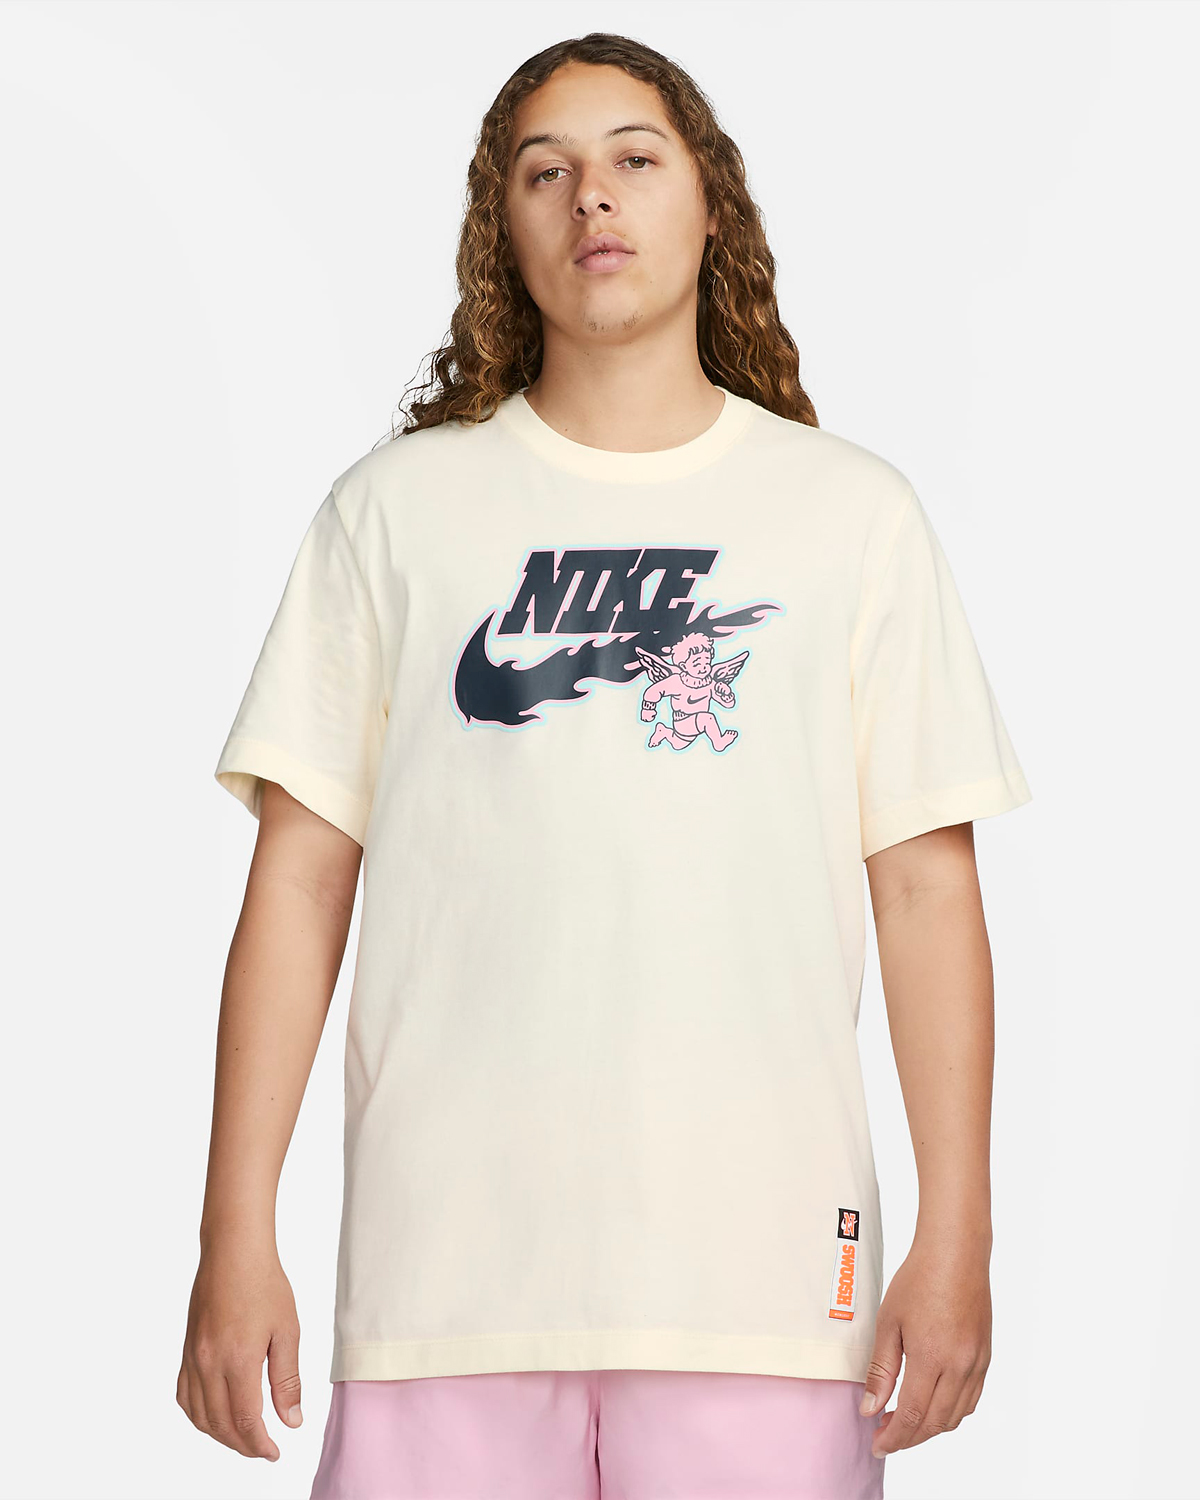 Nike-Sportswear-Shirt-Coconut-Milk-Pink-1